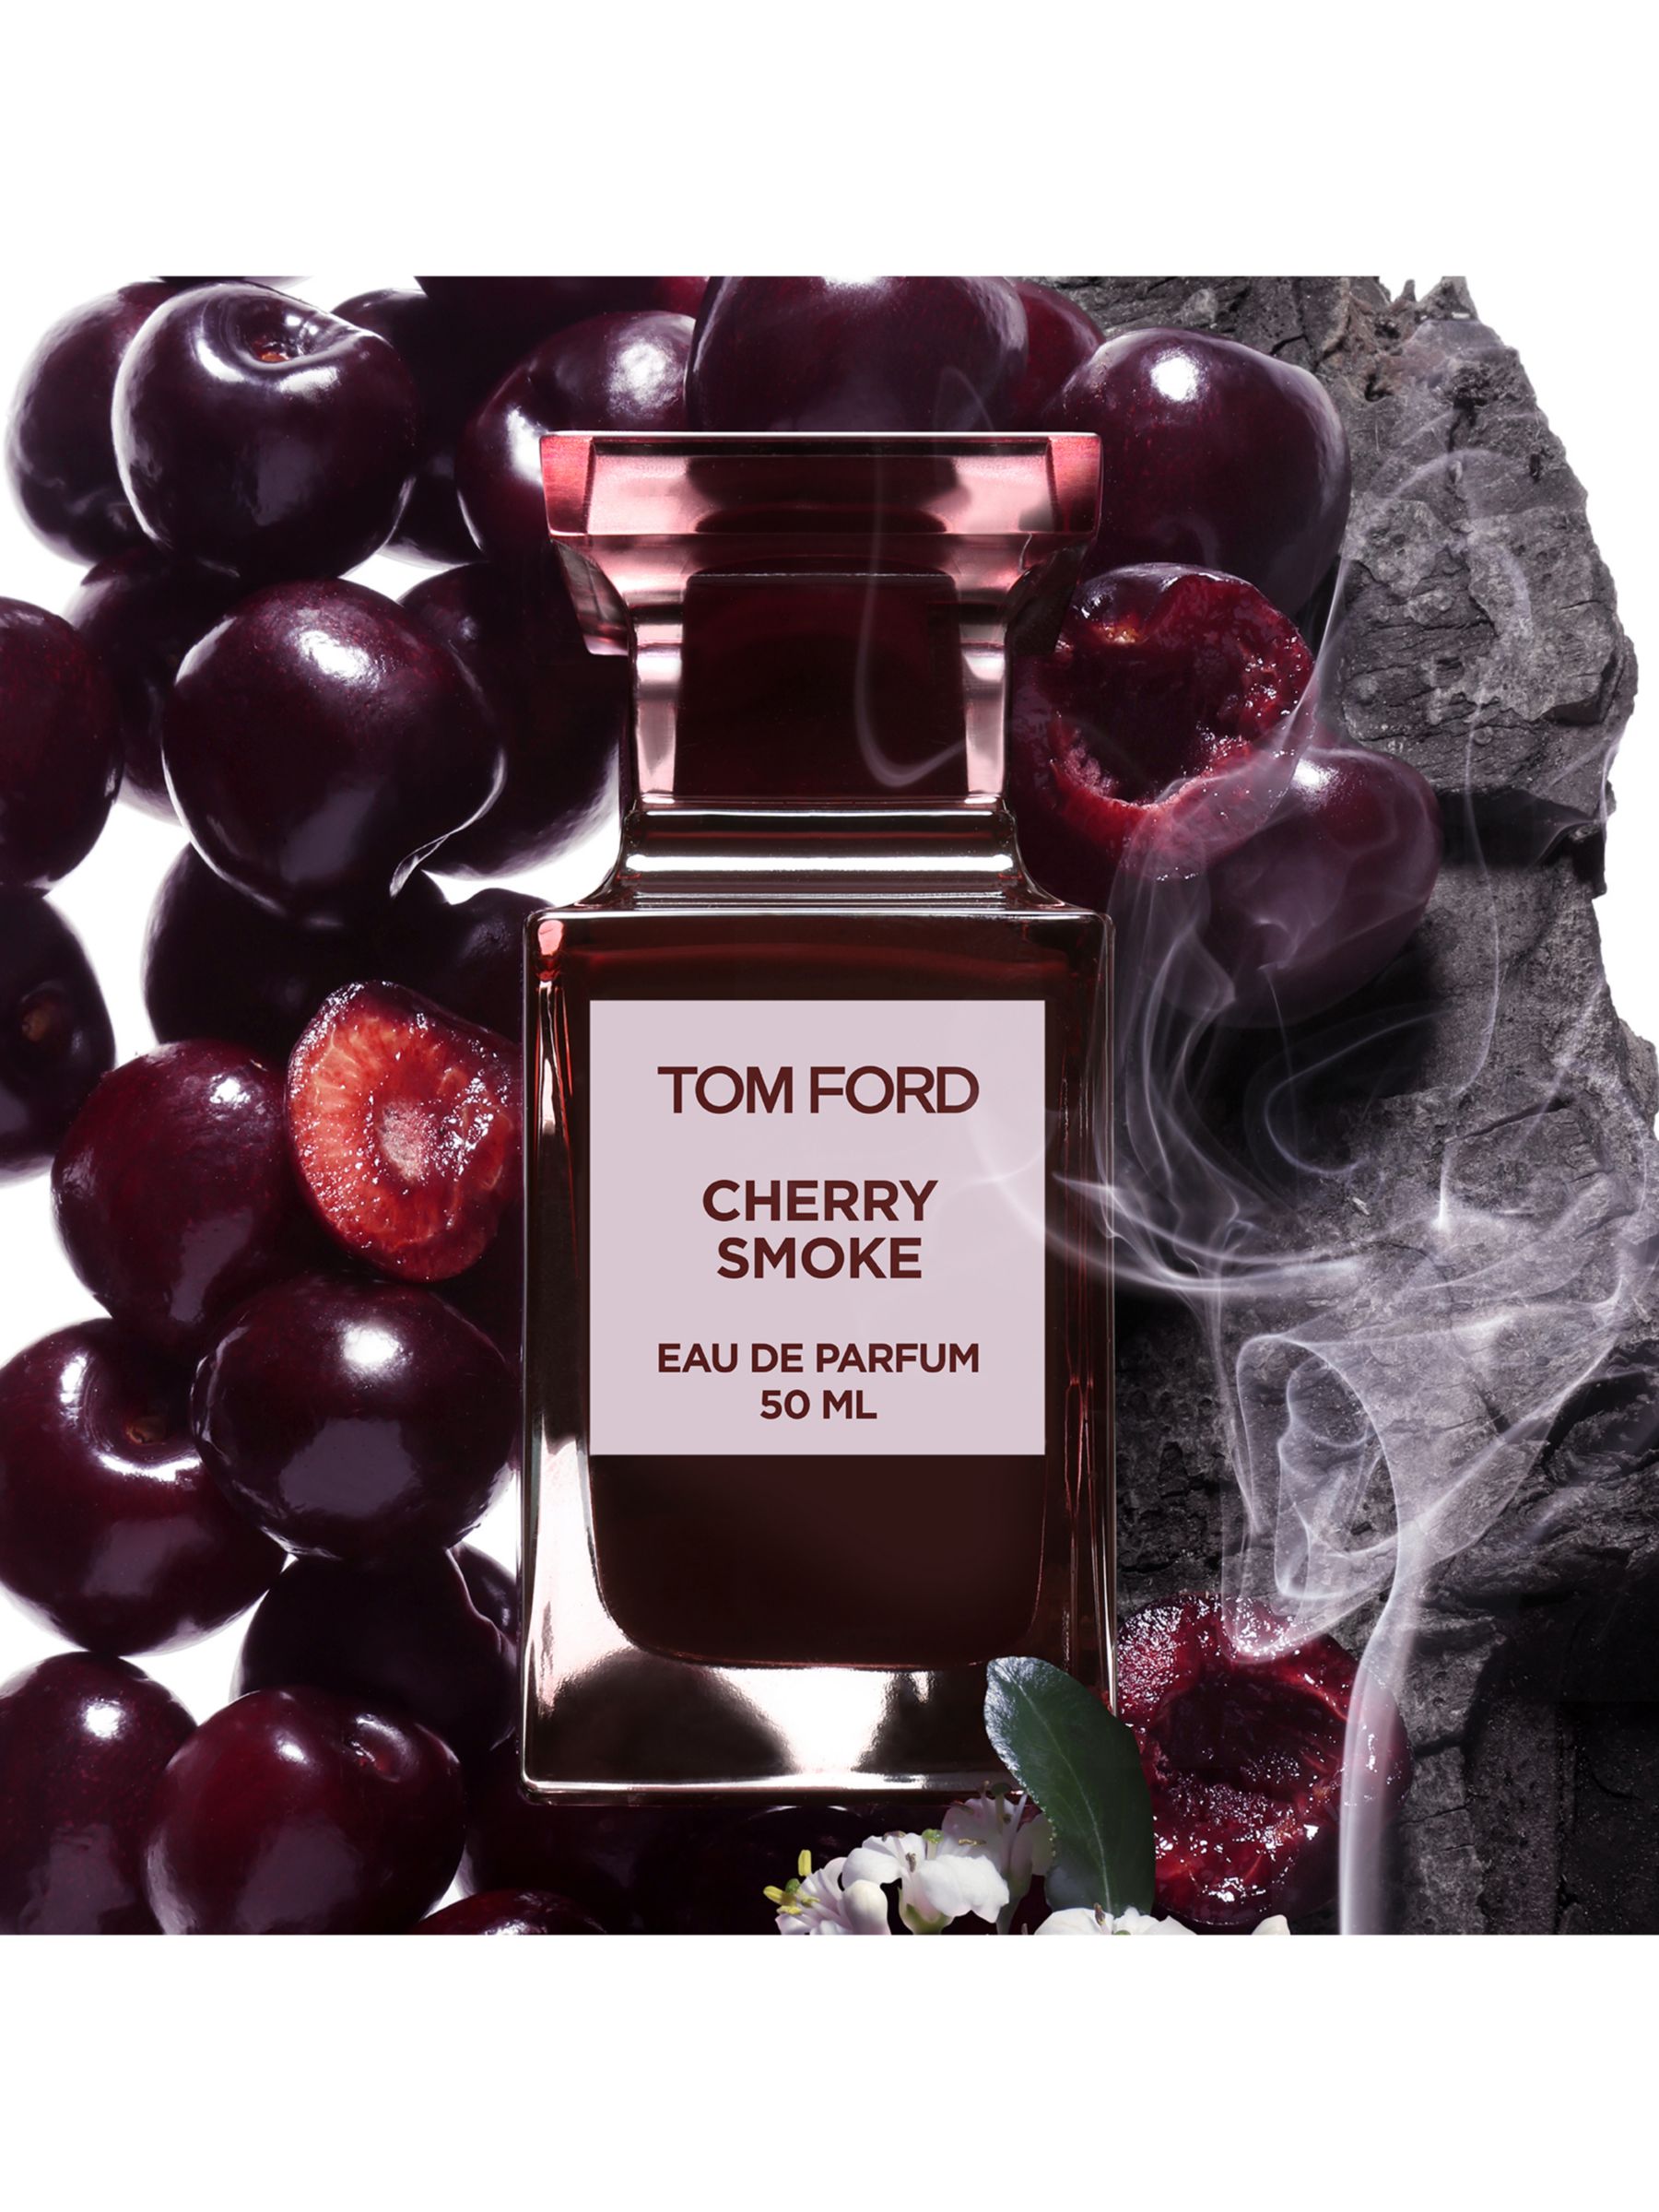 TOM FORD Cherry Smoke Eau de Parfum, 50ml at John Lewis & Partners